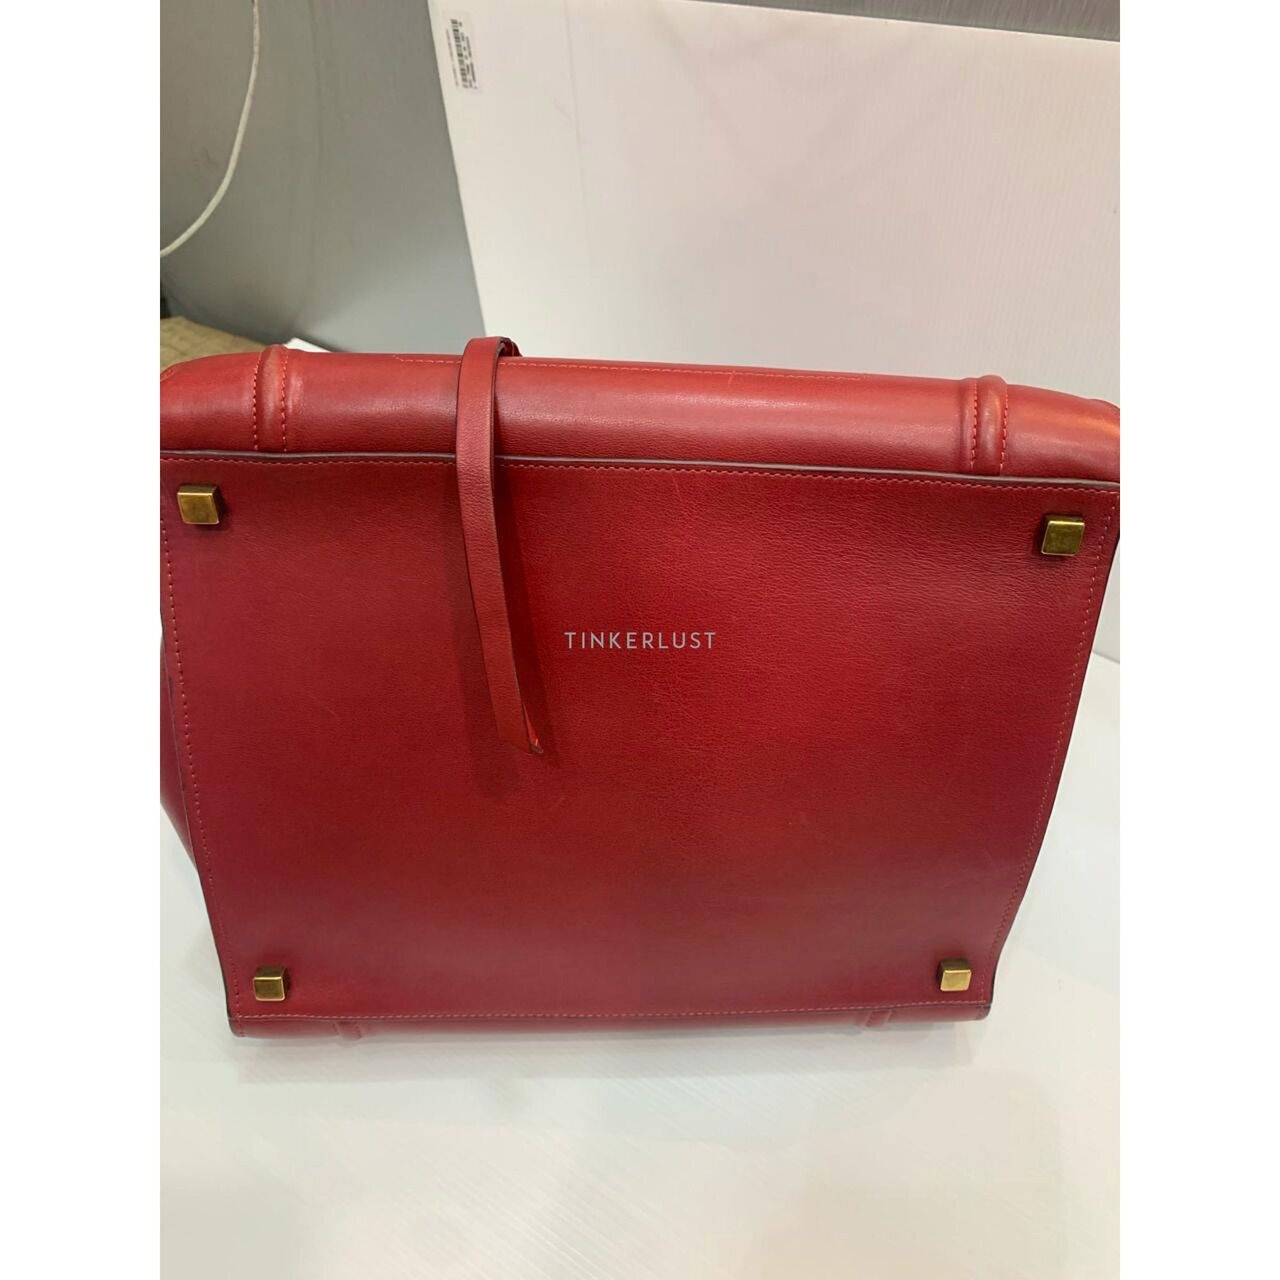 Celine Luggage Phantom Leather Red 2012 Handbag